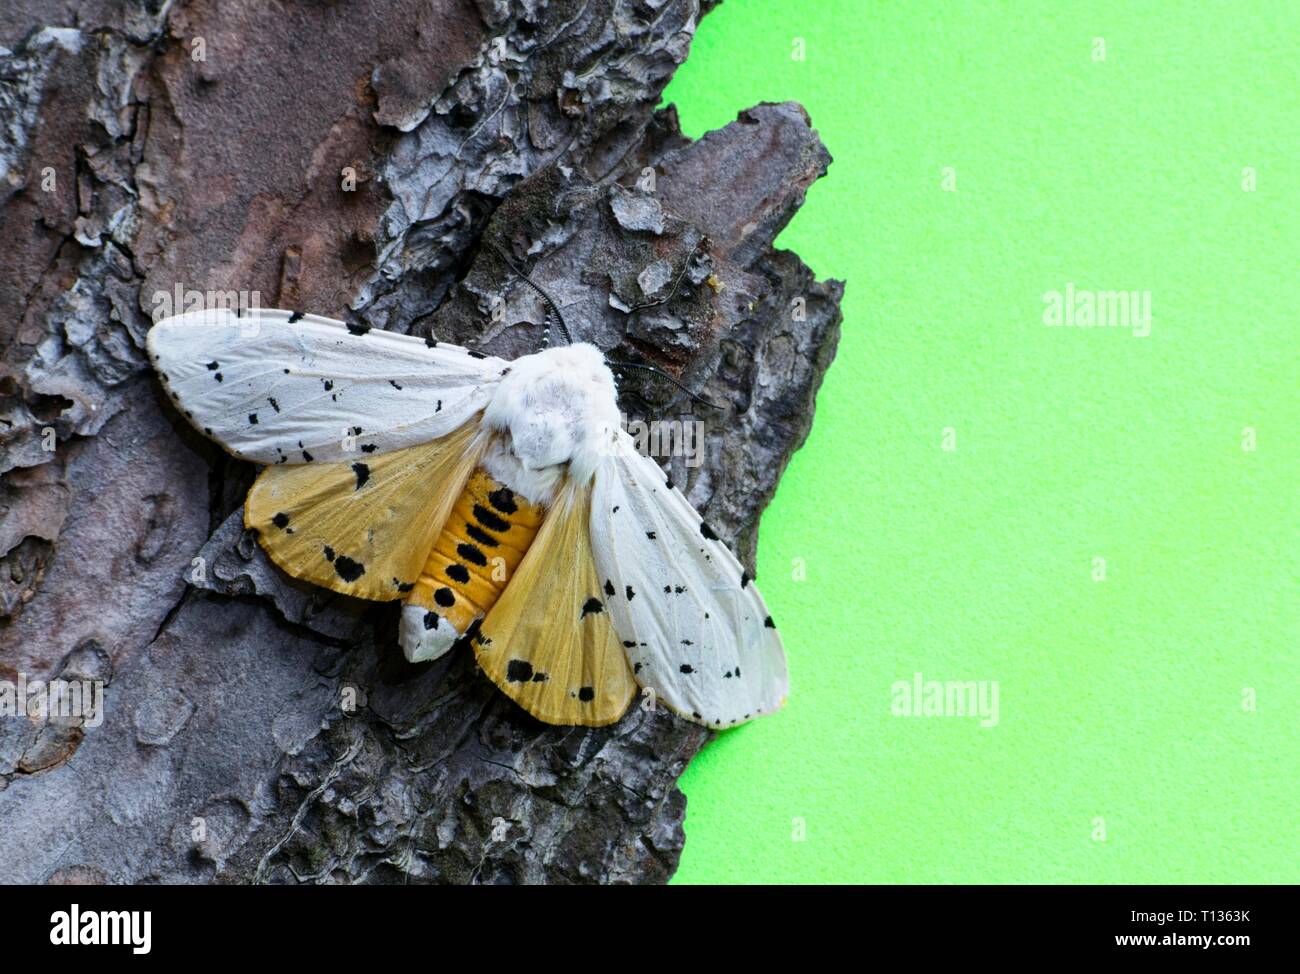 An Acrea or Salt Marsh moth (Estigmene acrea) on tree bark with wings spread, displaying bright orange under wings against a green background. Stock Photo